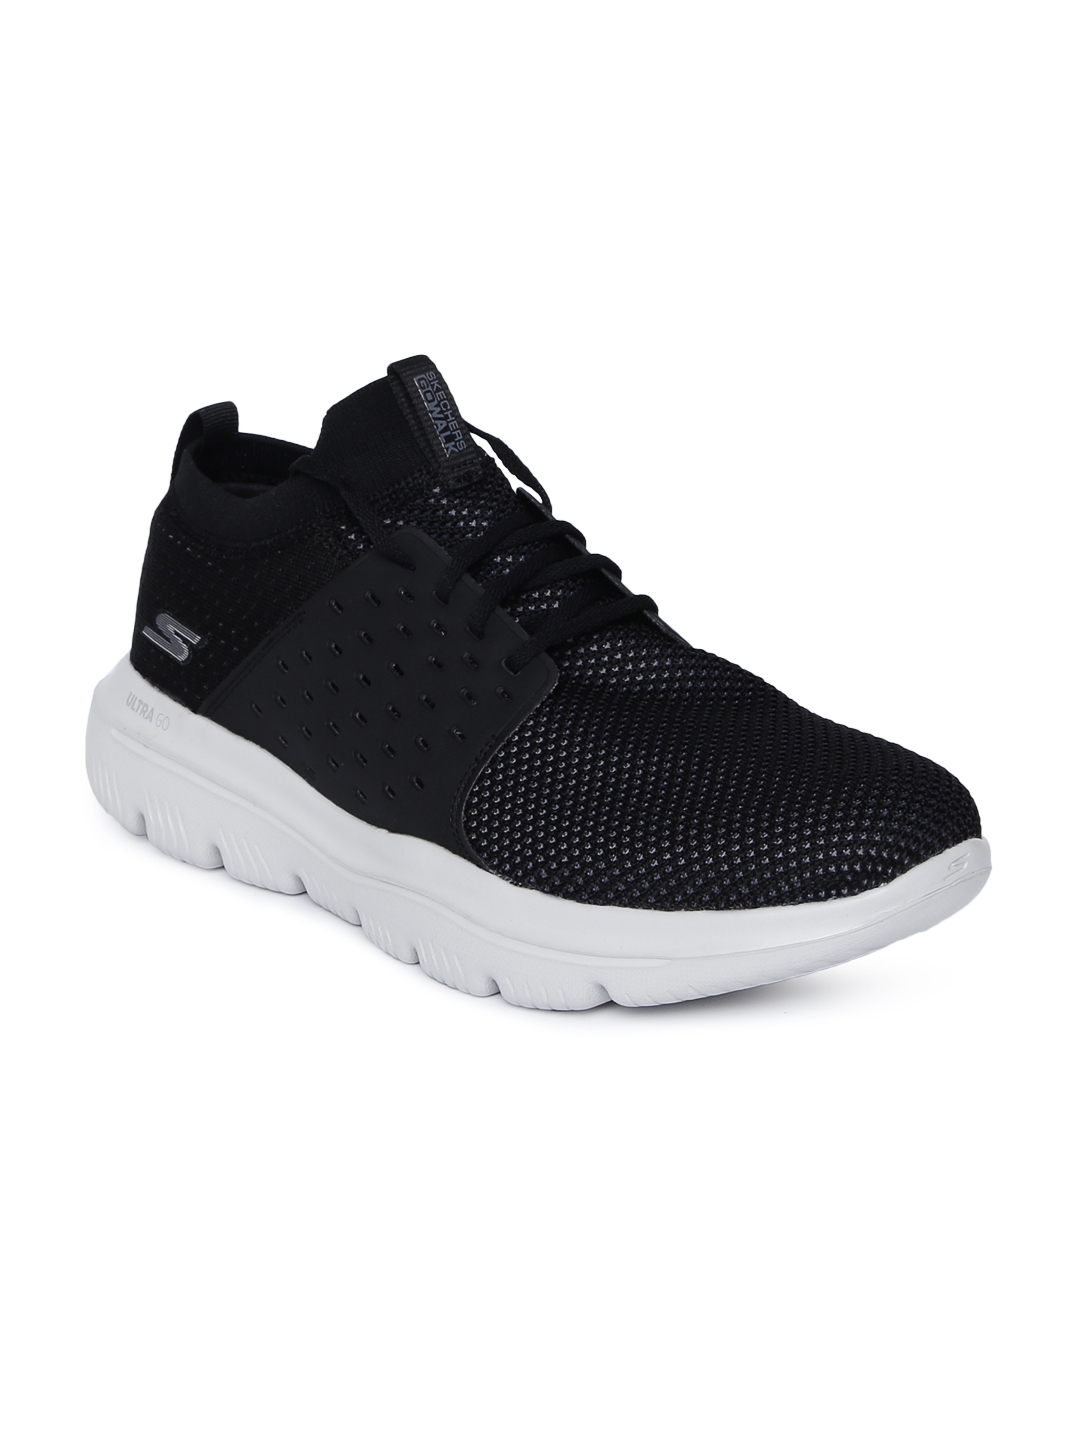 Buy GO WALK ULTRA TURBO Men Black Walking Shoes - Shoes for Men 8885957 | Myntra